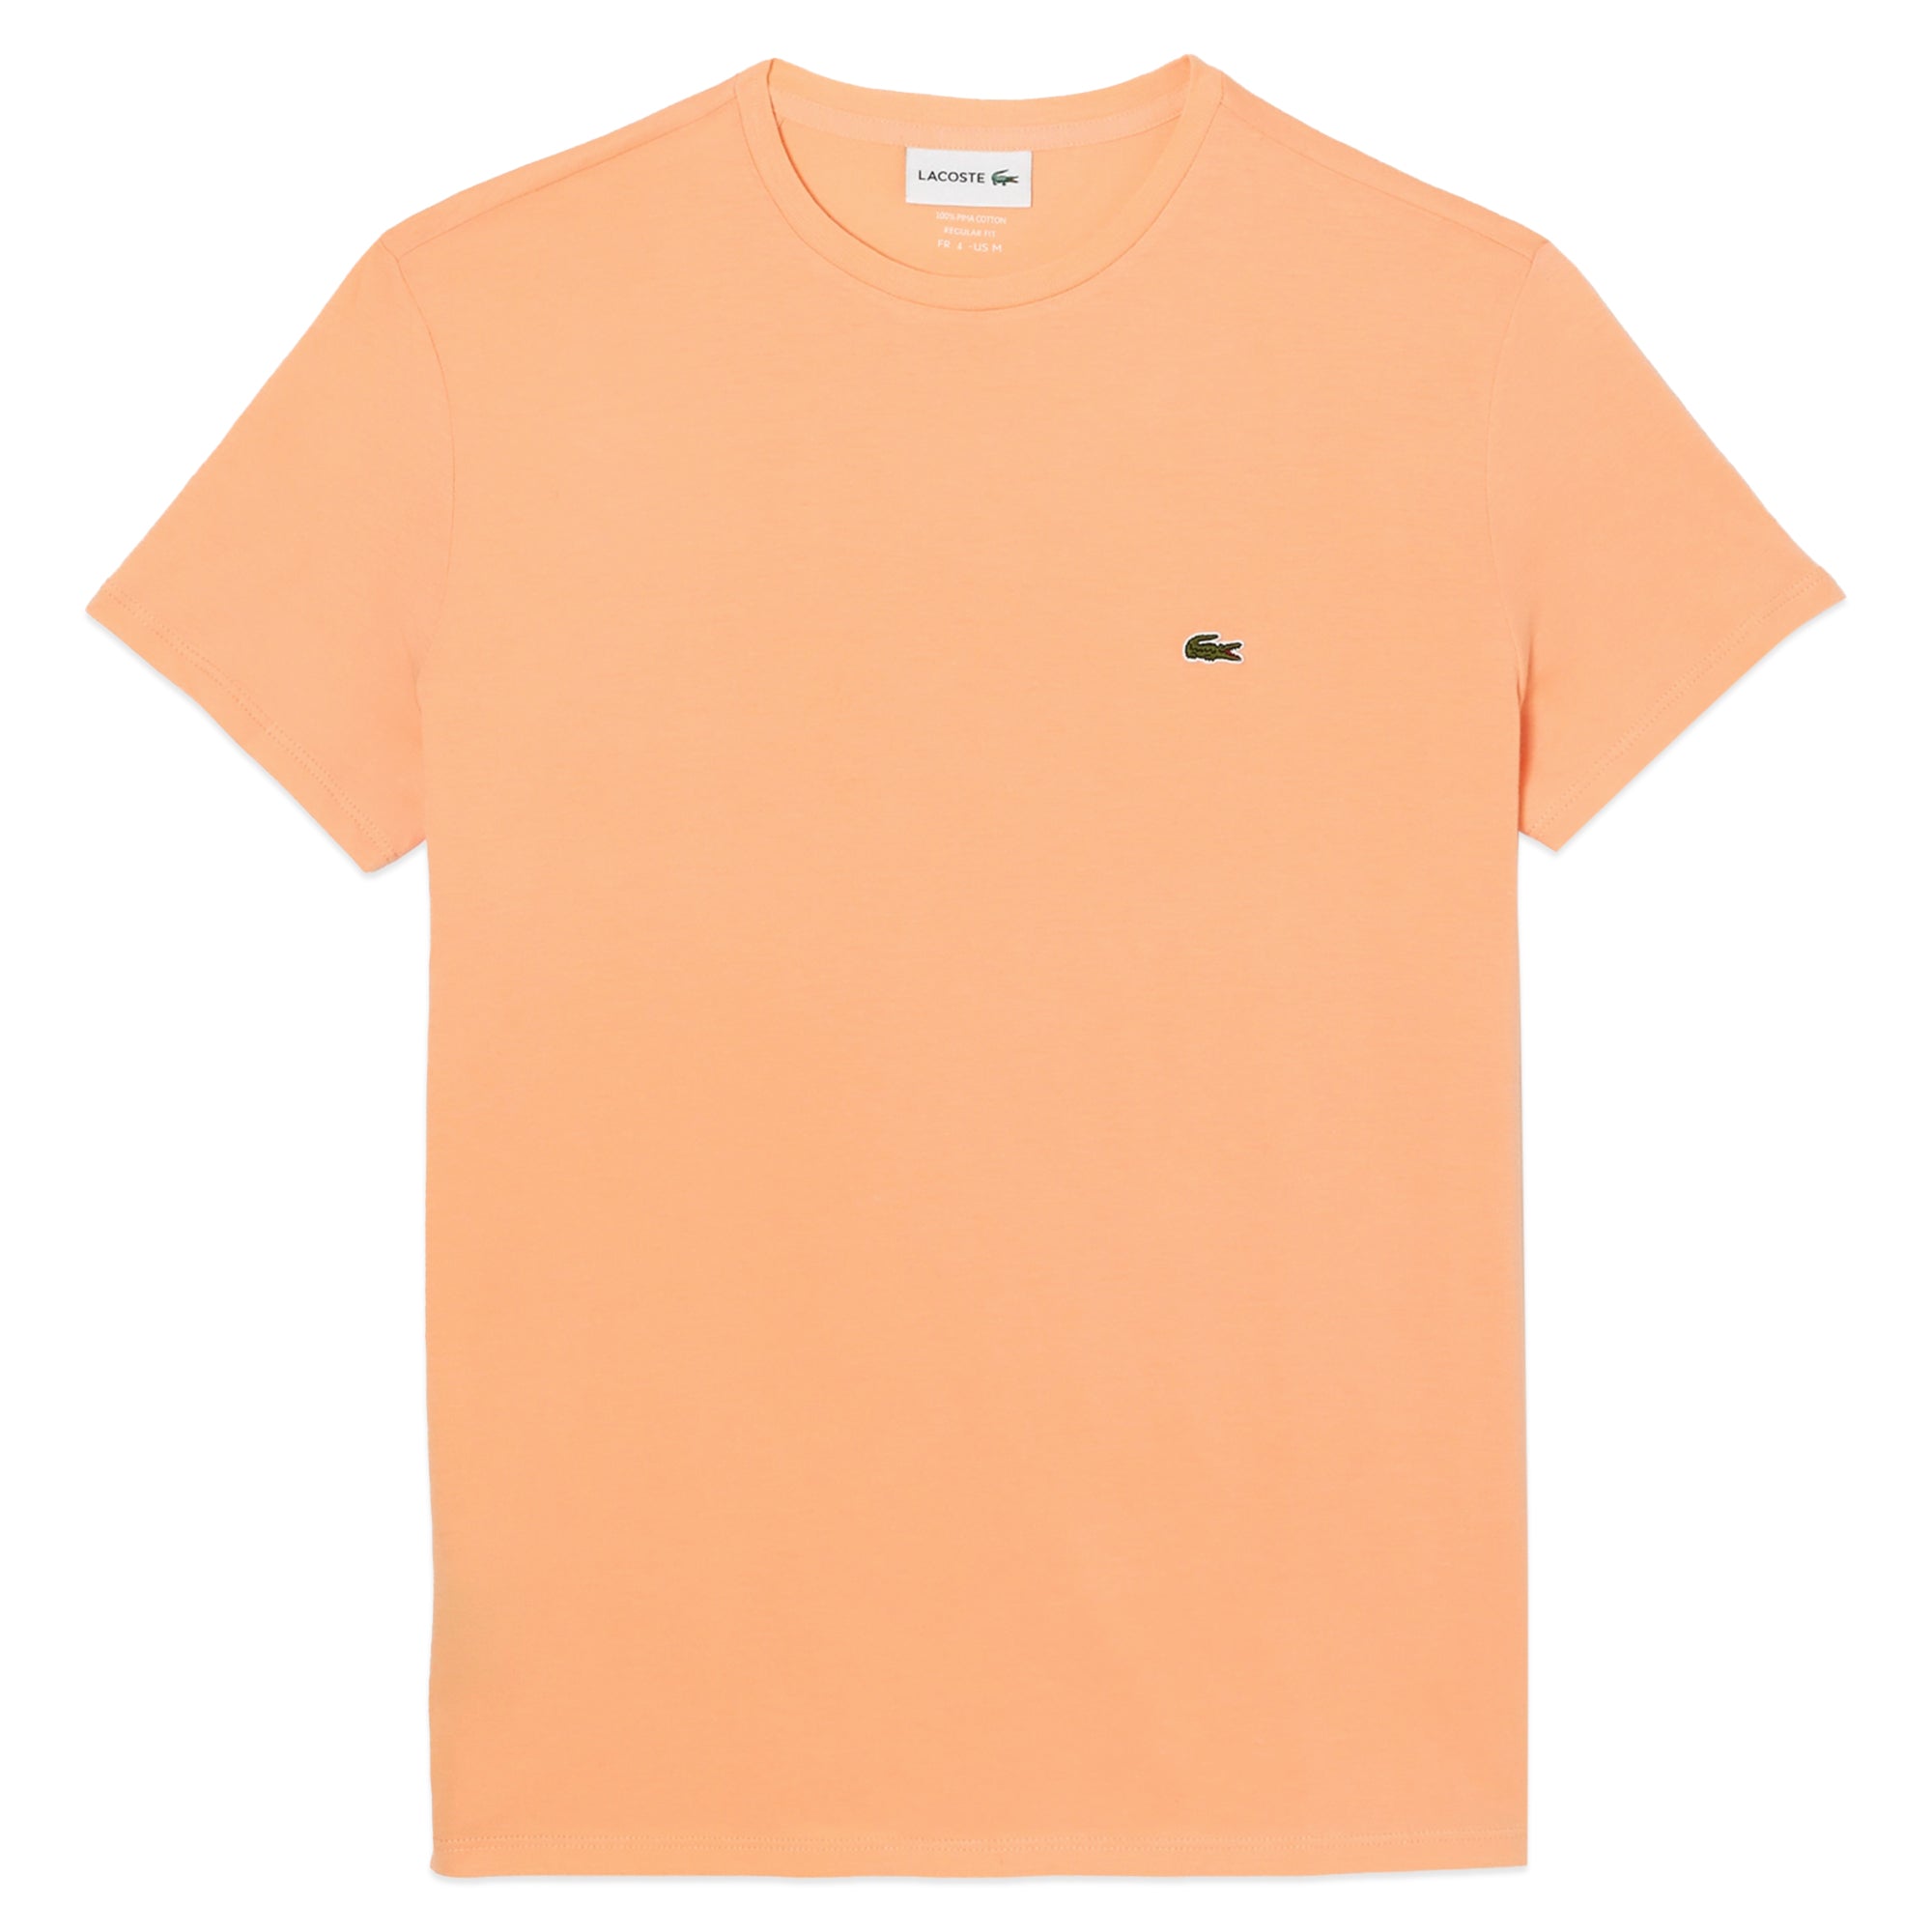 Lacoste Pima Cotton T-Shirt TH6709 - Ledge Orange